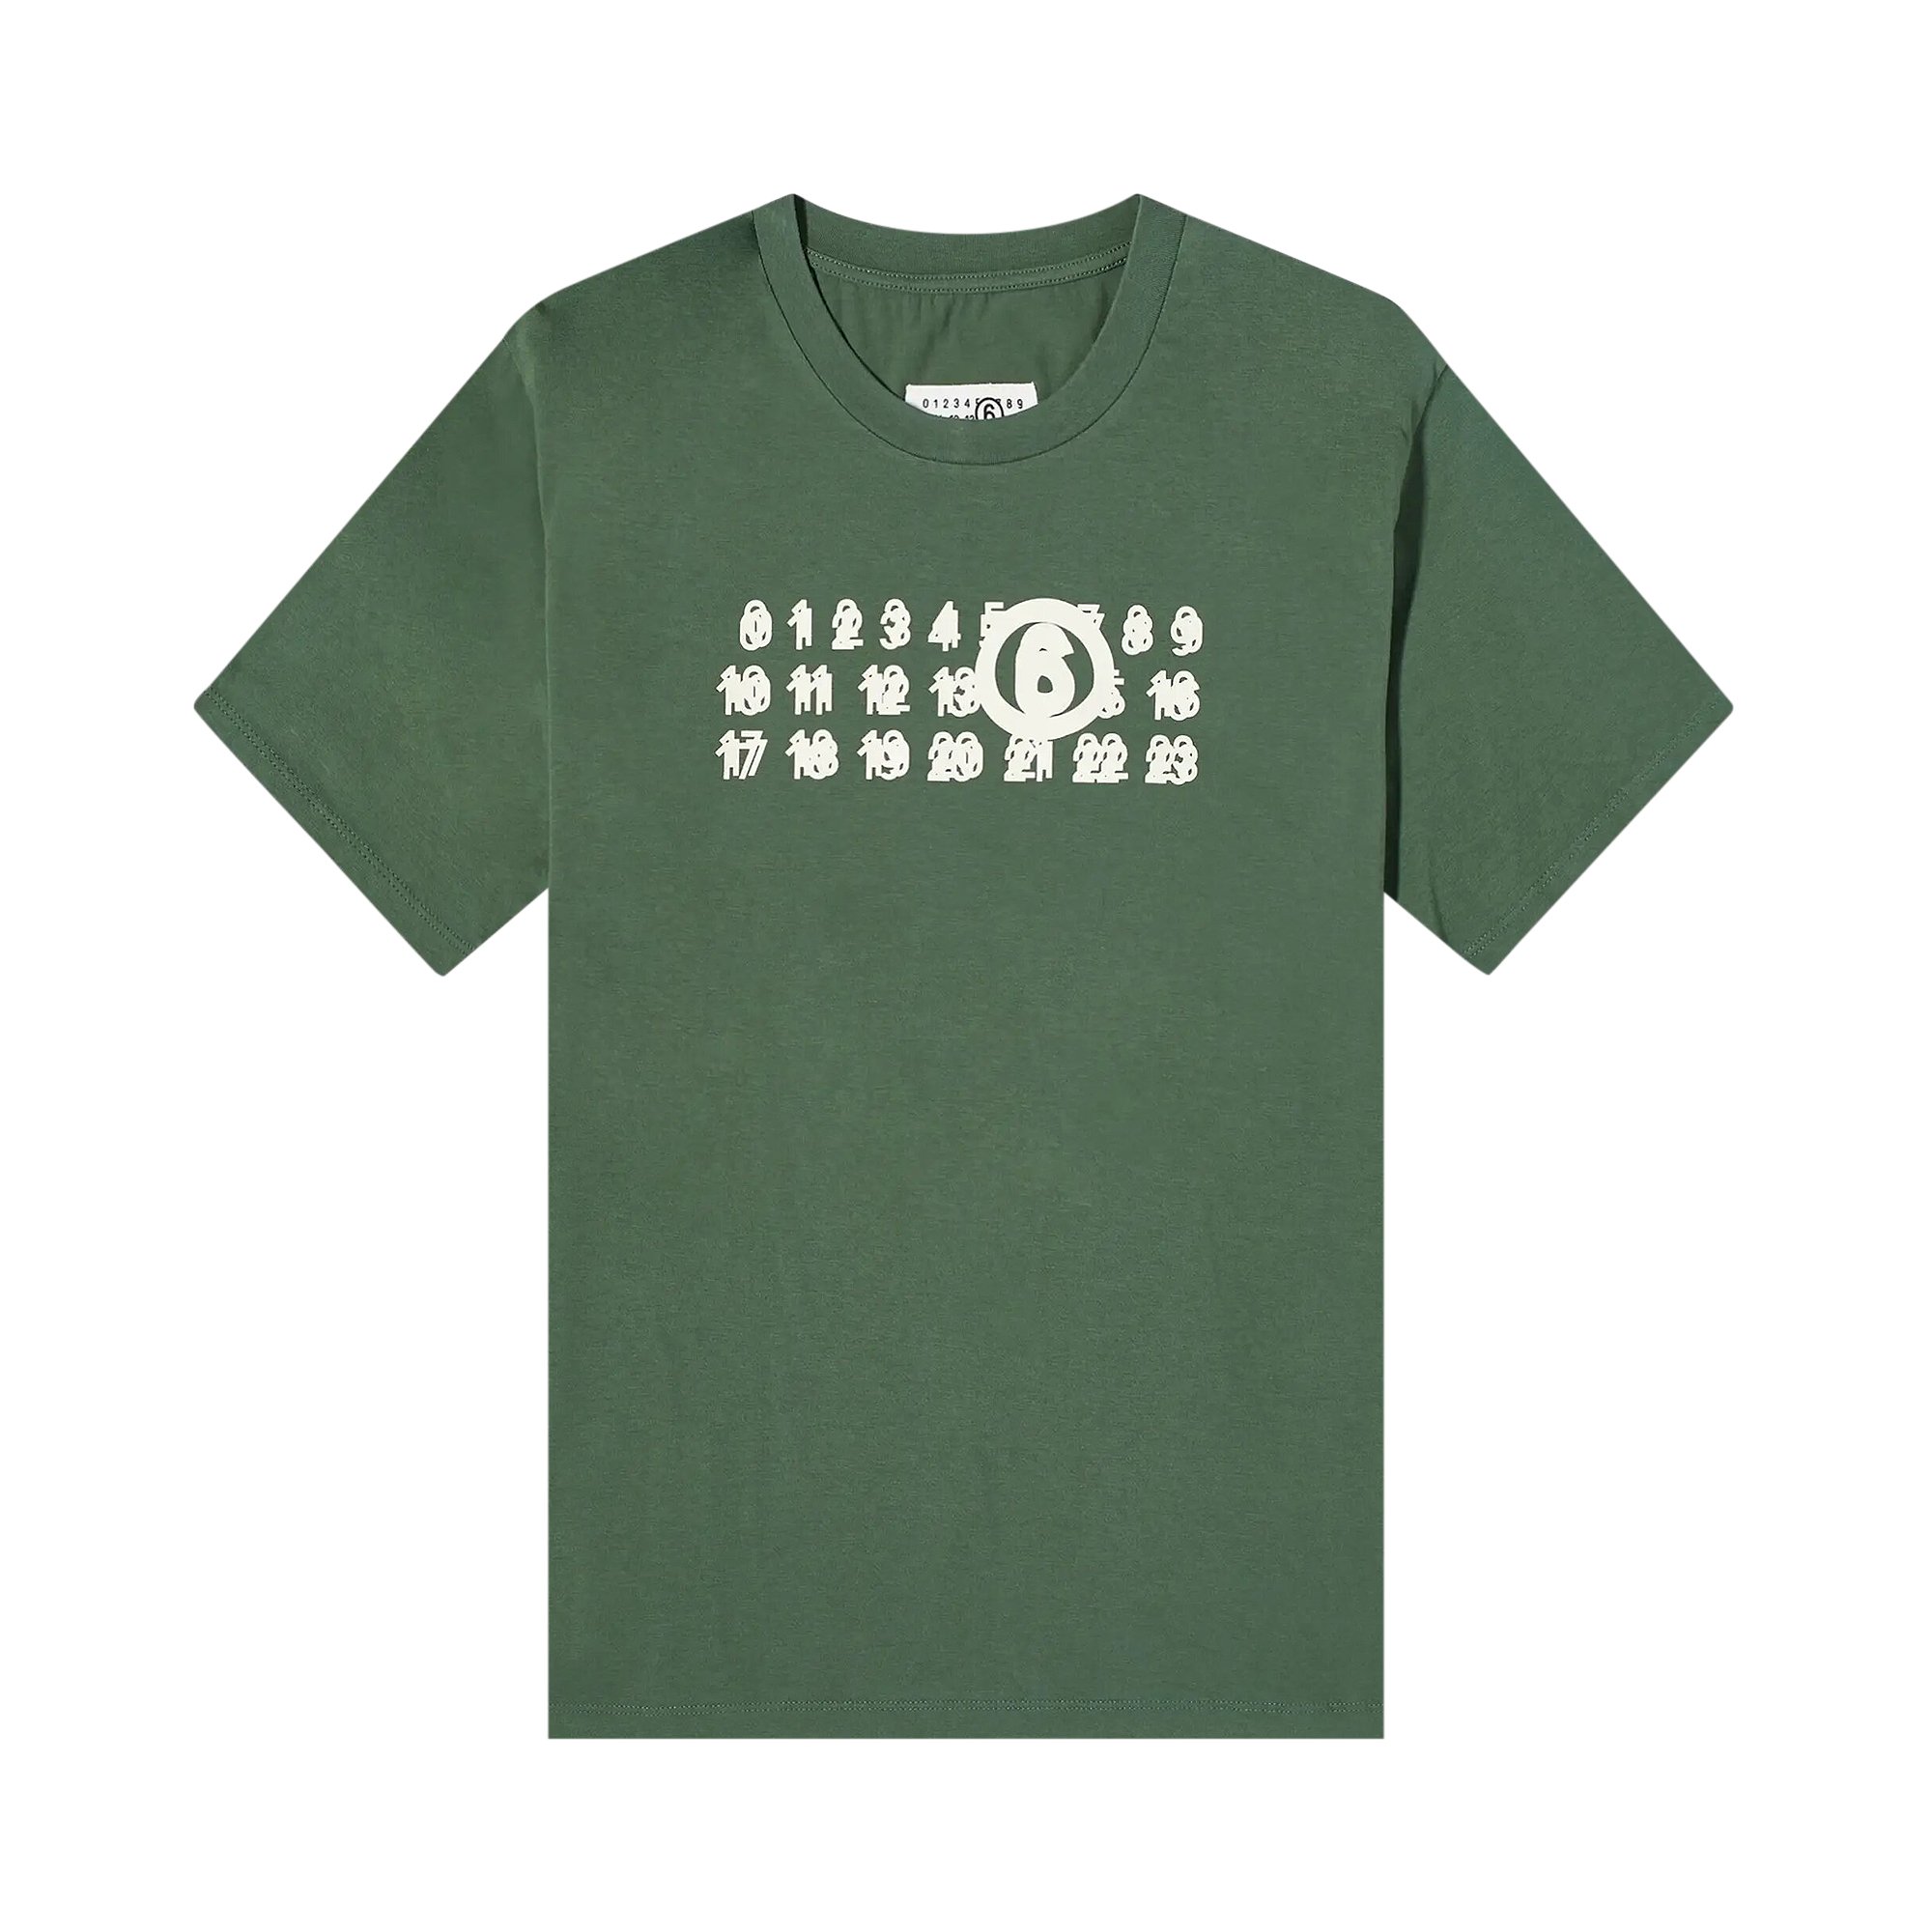 Buy MM6 Maison Margiela T-Shirt 'Green' - S62GD0176 S23588 630 | GOAT